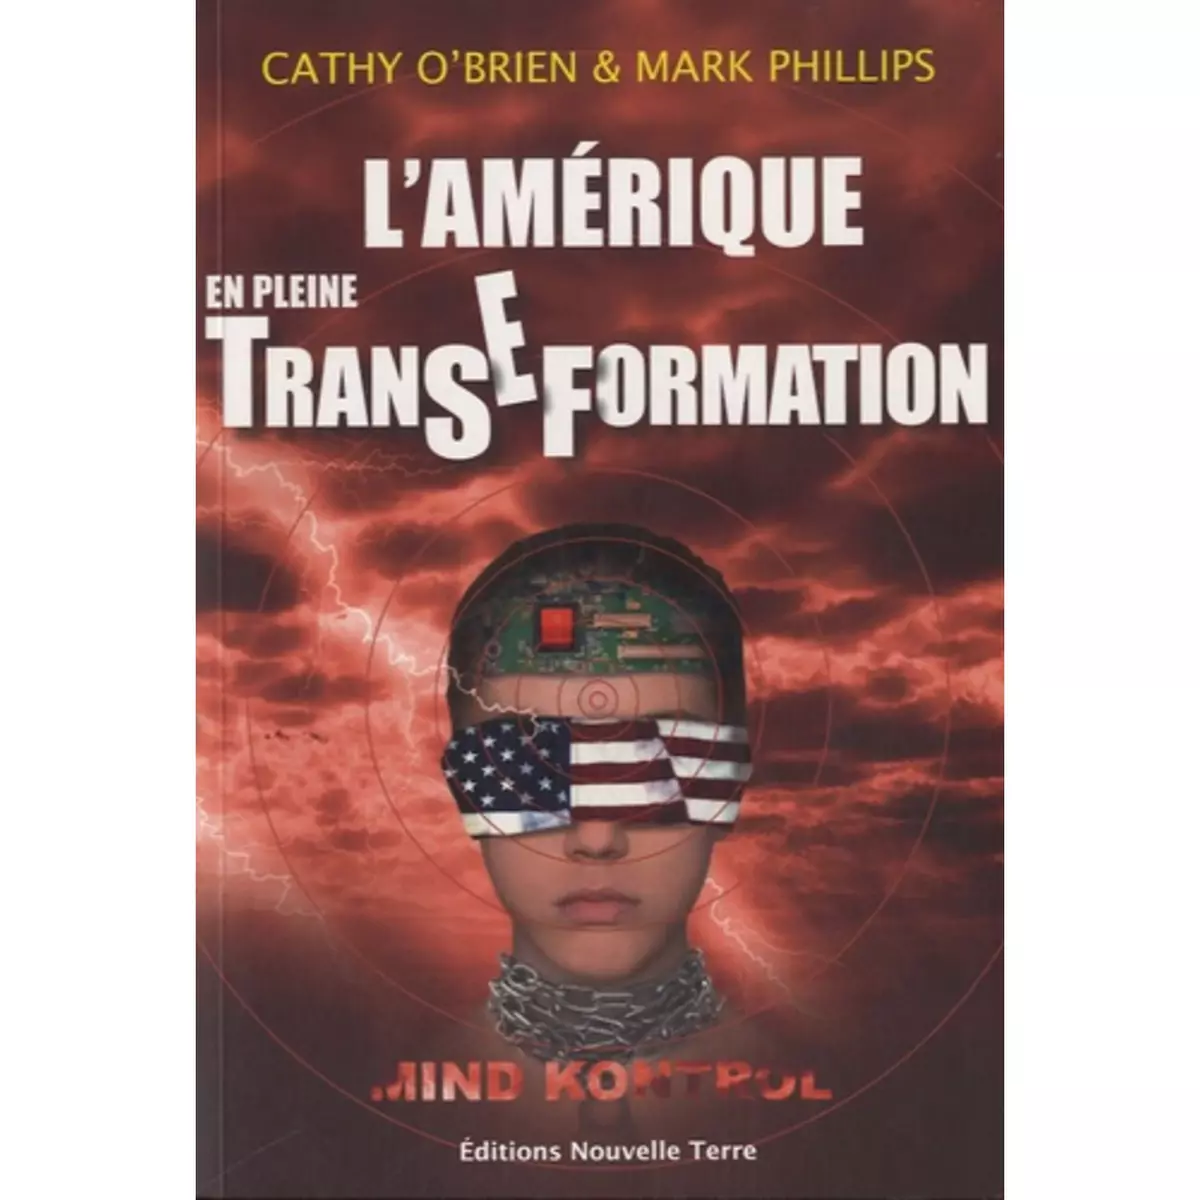  L'AMERIQUE EN PLEINE TRANSEFORMATION, O'Brien Cathy